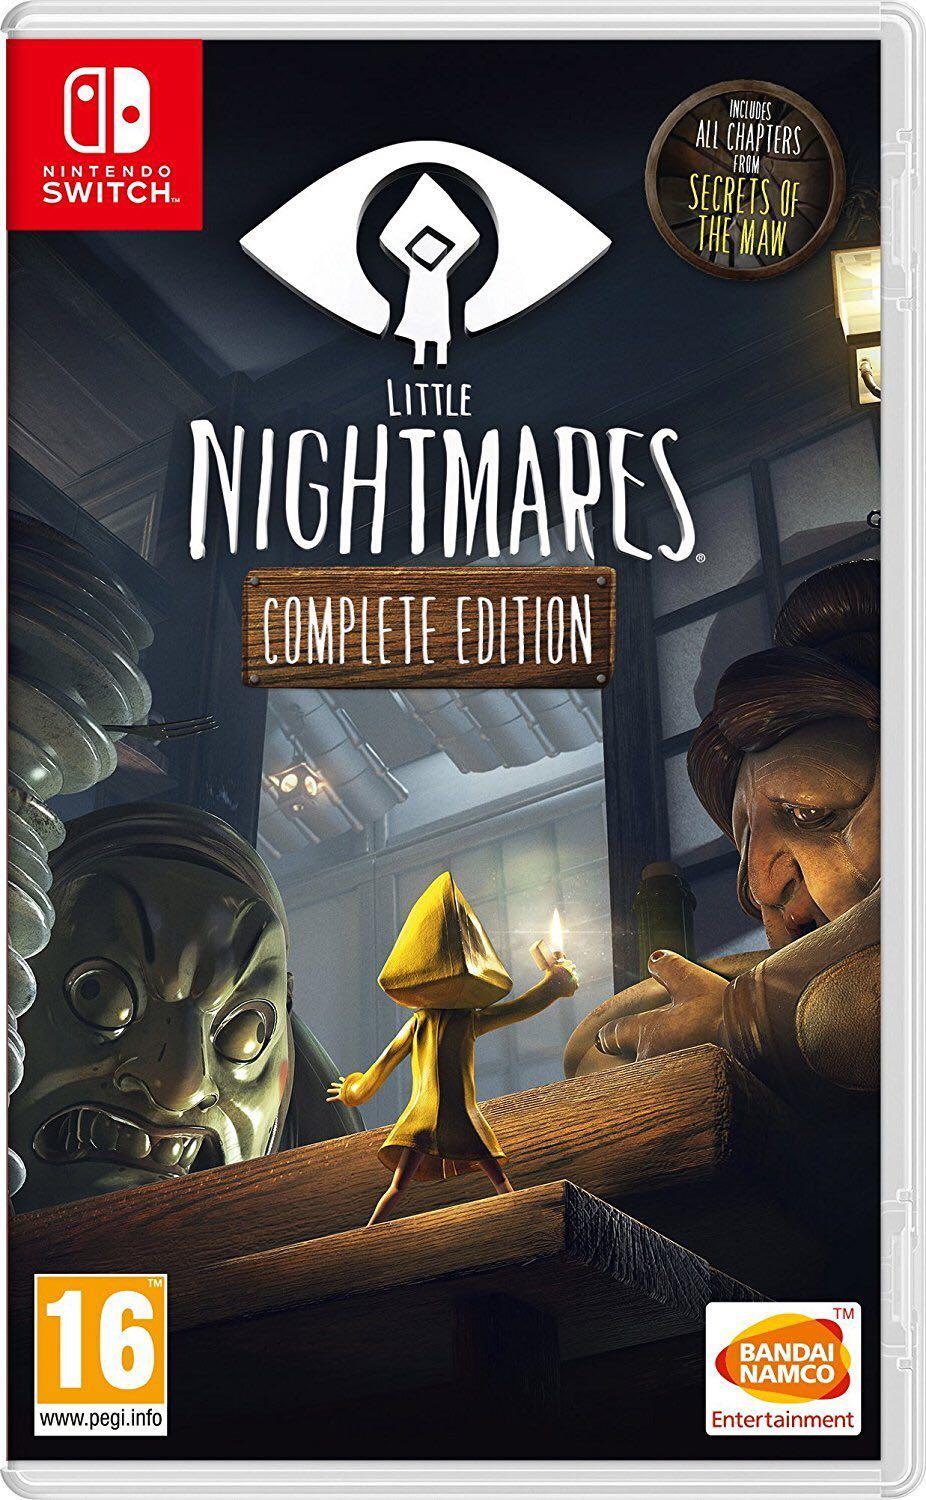 little nightmares 2 nintendo switch release date